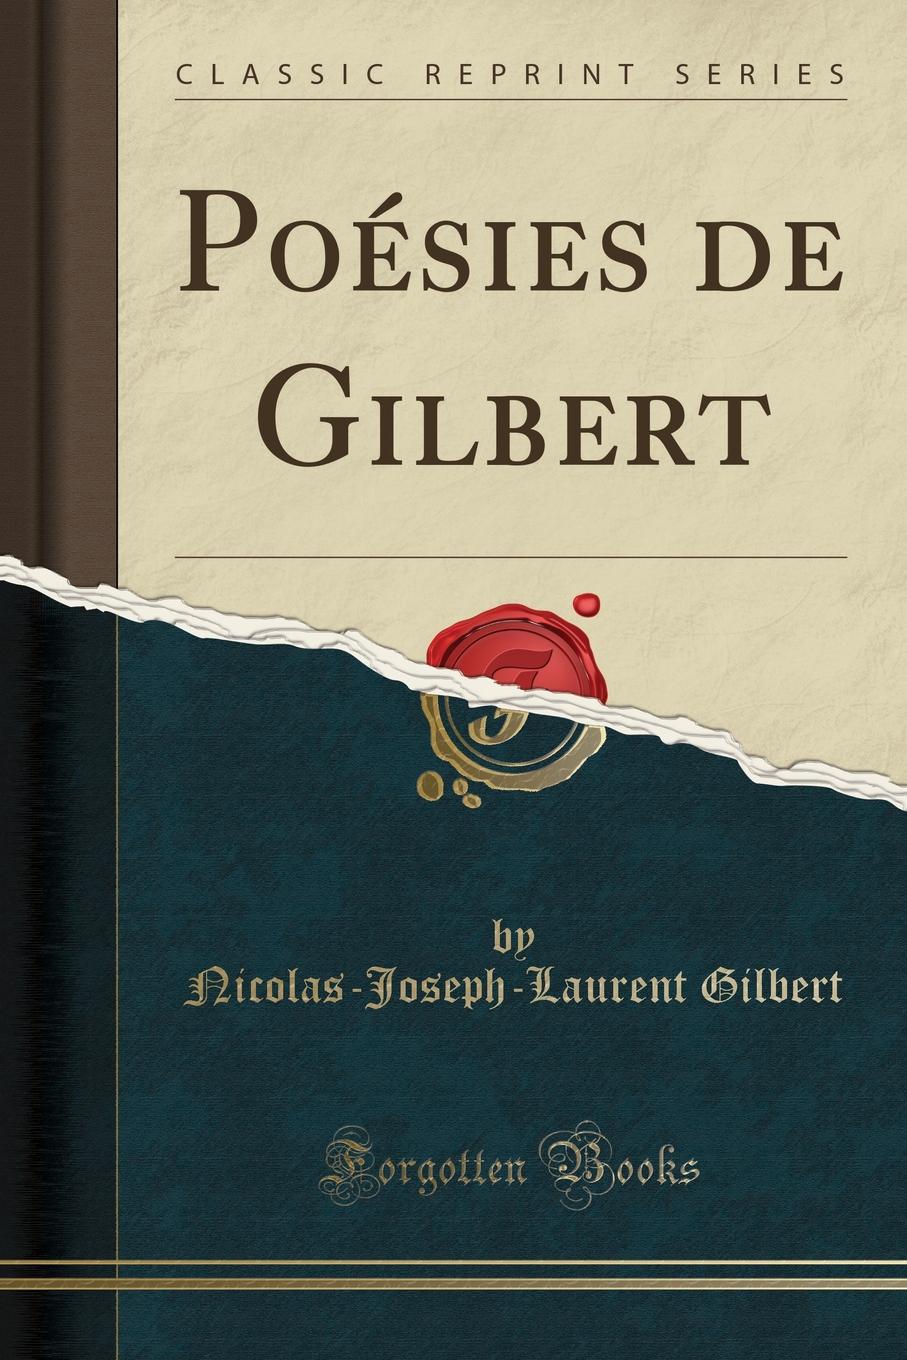 Nicolas-Joseph-Laurent Gilbert Poesies de Gilbert (Classic Reprint)